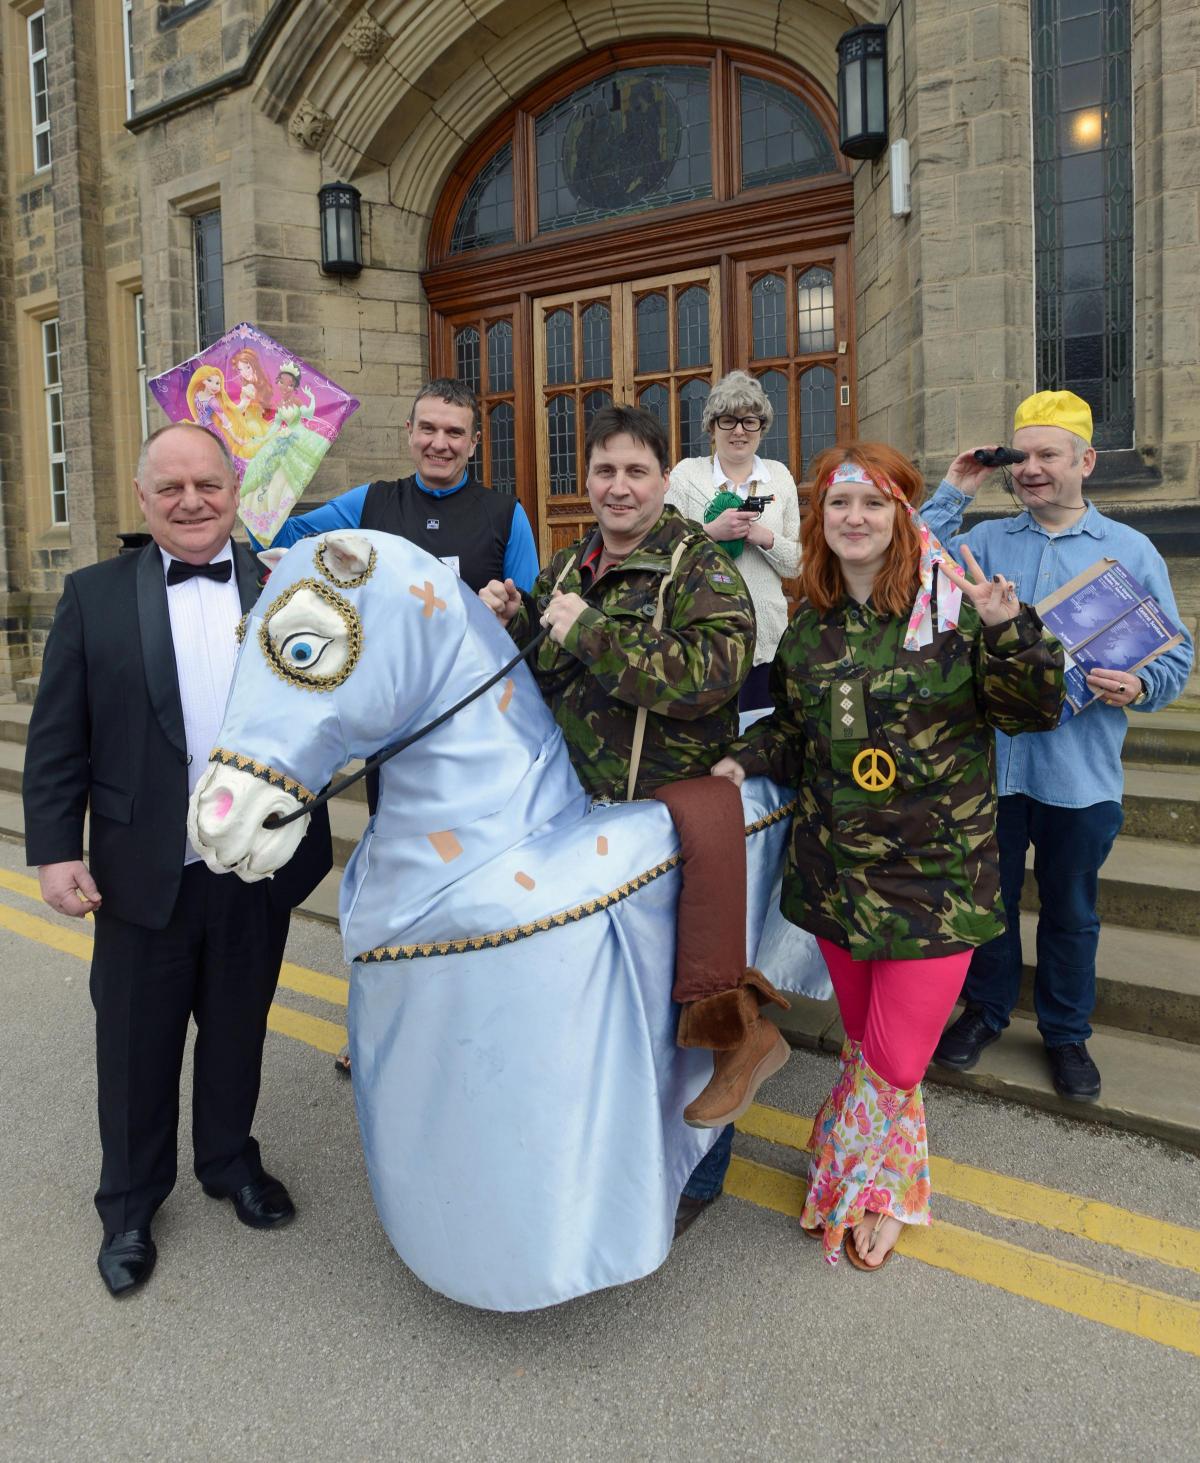 Staff at Bradford Grammar School in costume for World Book Day